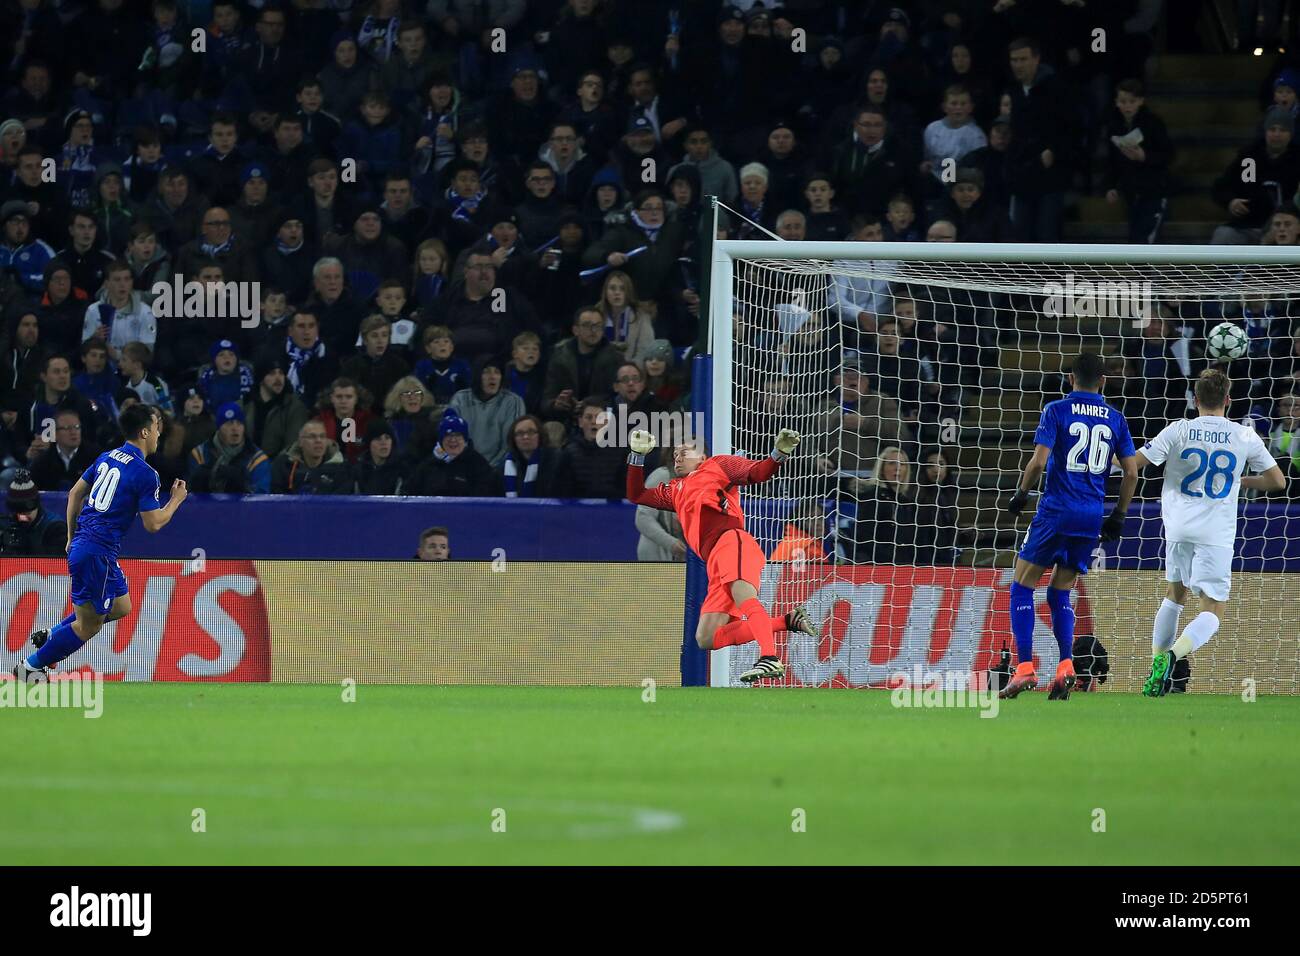 Leicester City S Shinji Okazaki Scores His Side S First Goal Of The Game Stock Photo Alamy